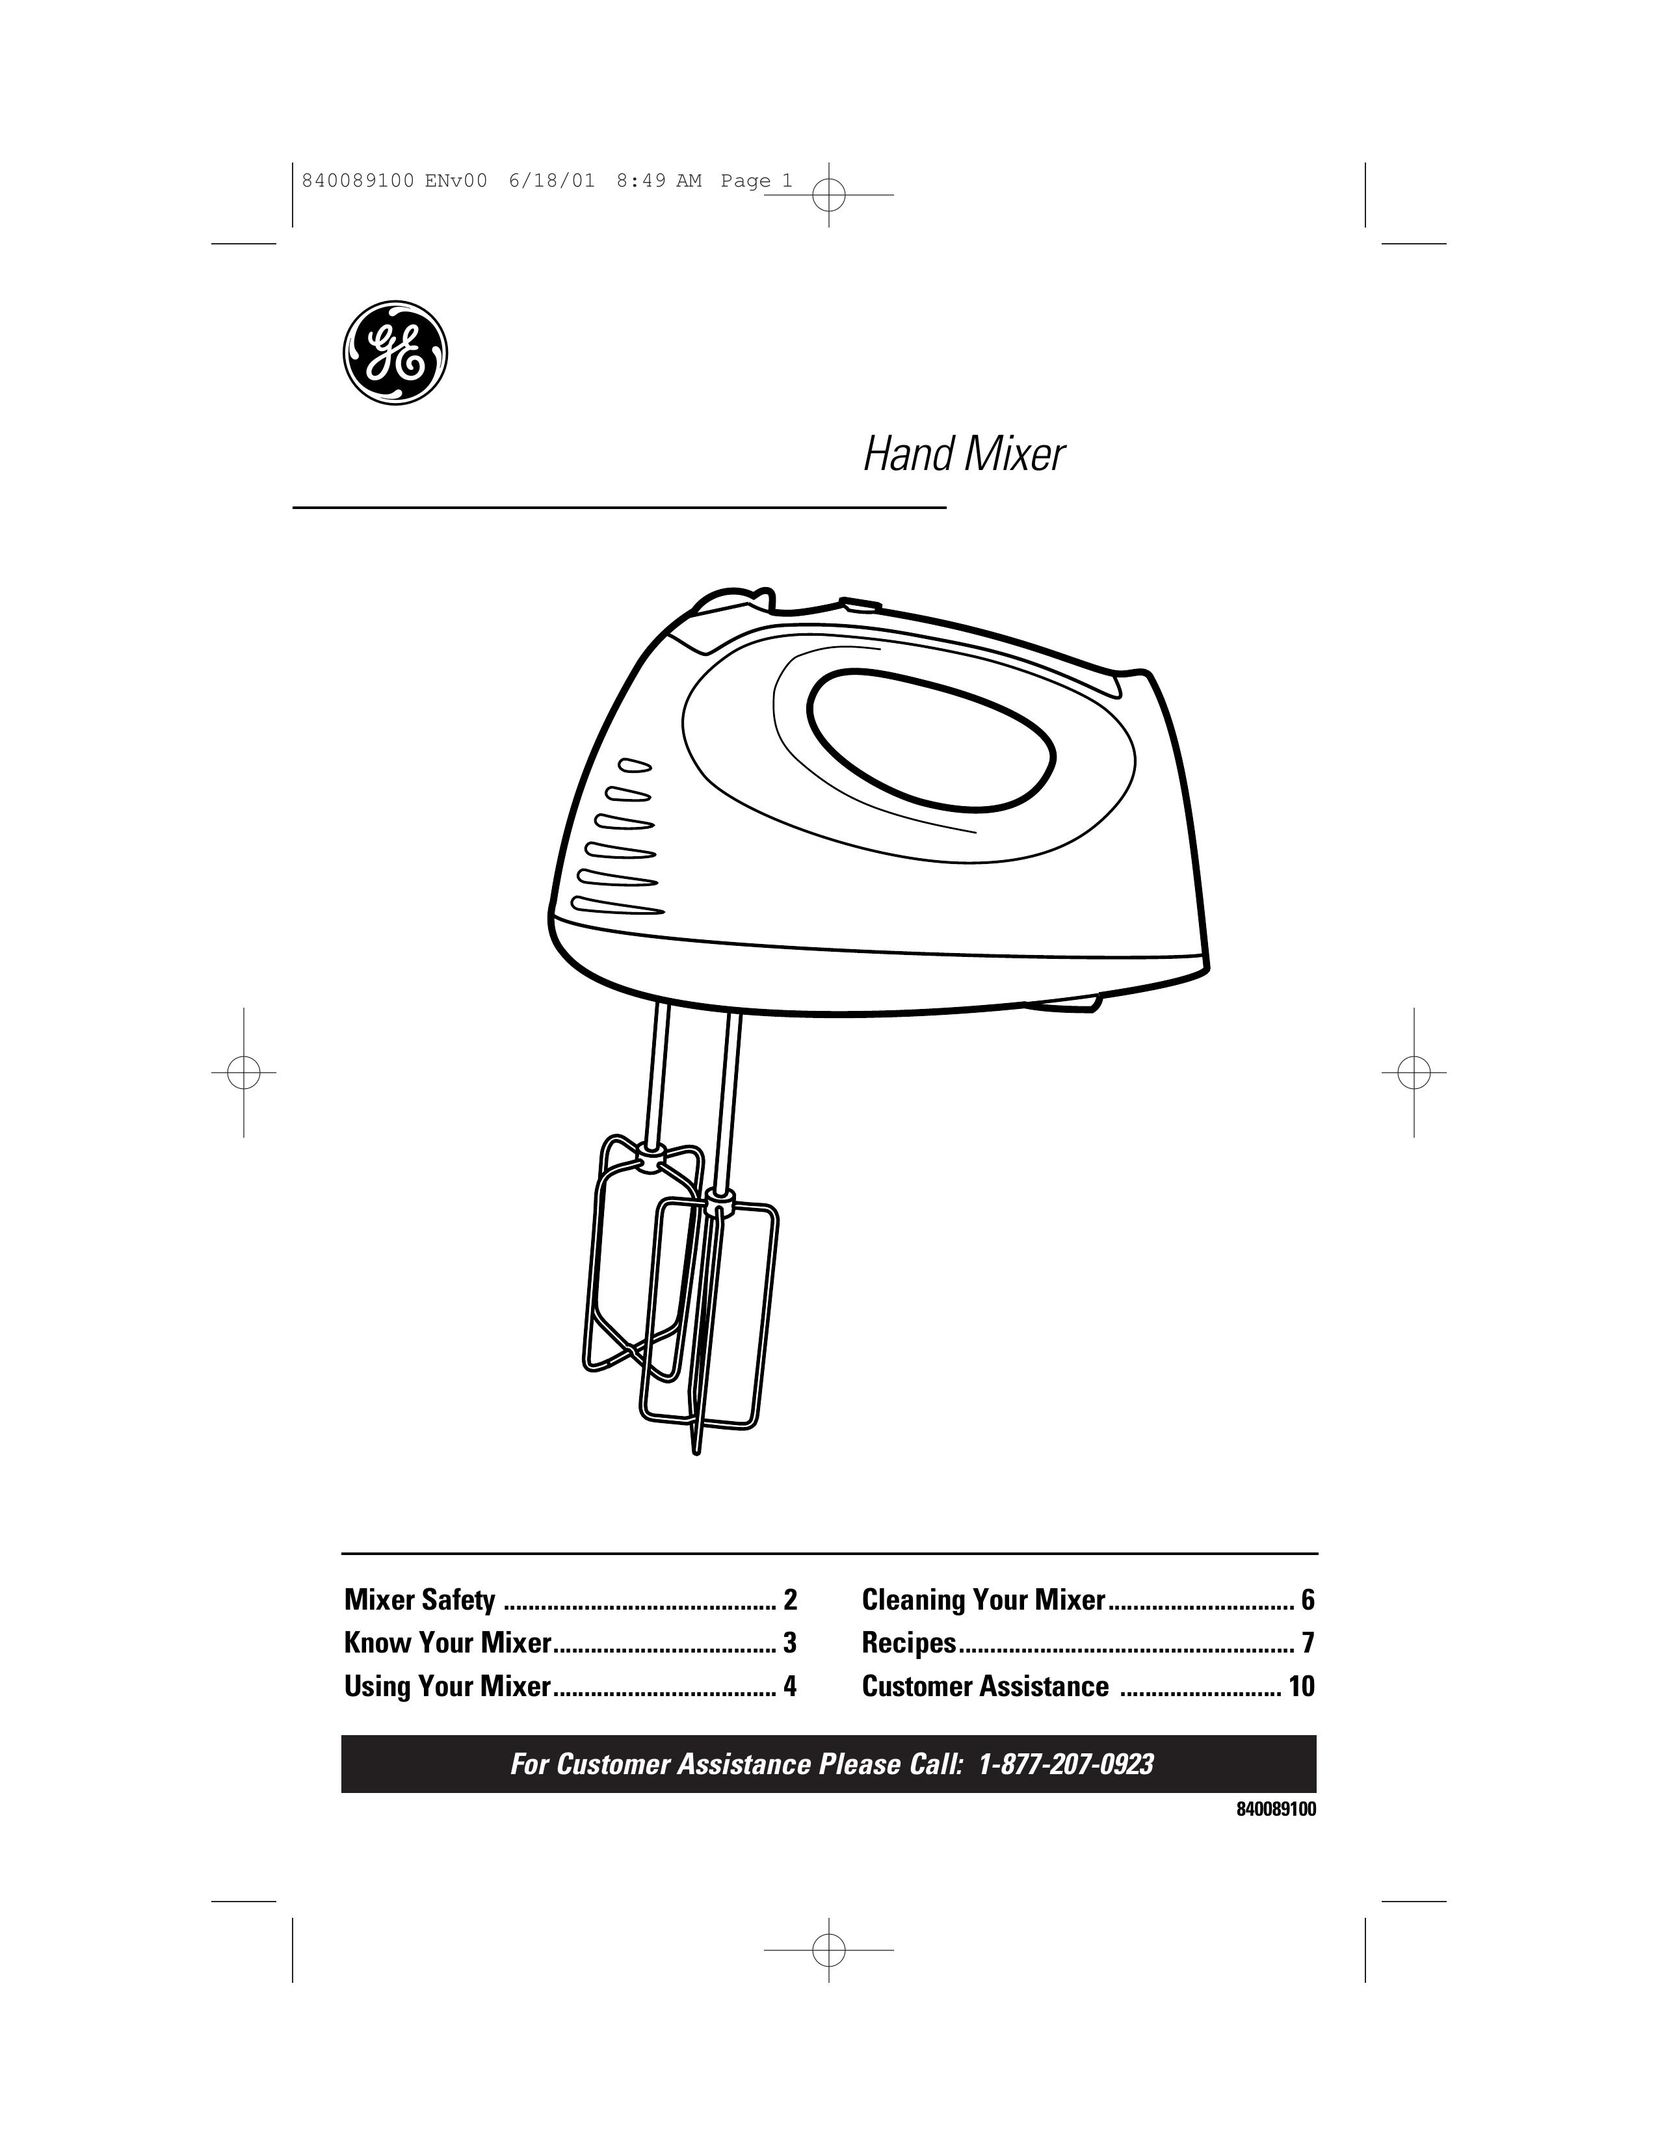 GE 106742 Mixer User Manual